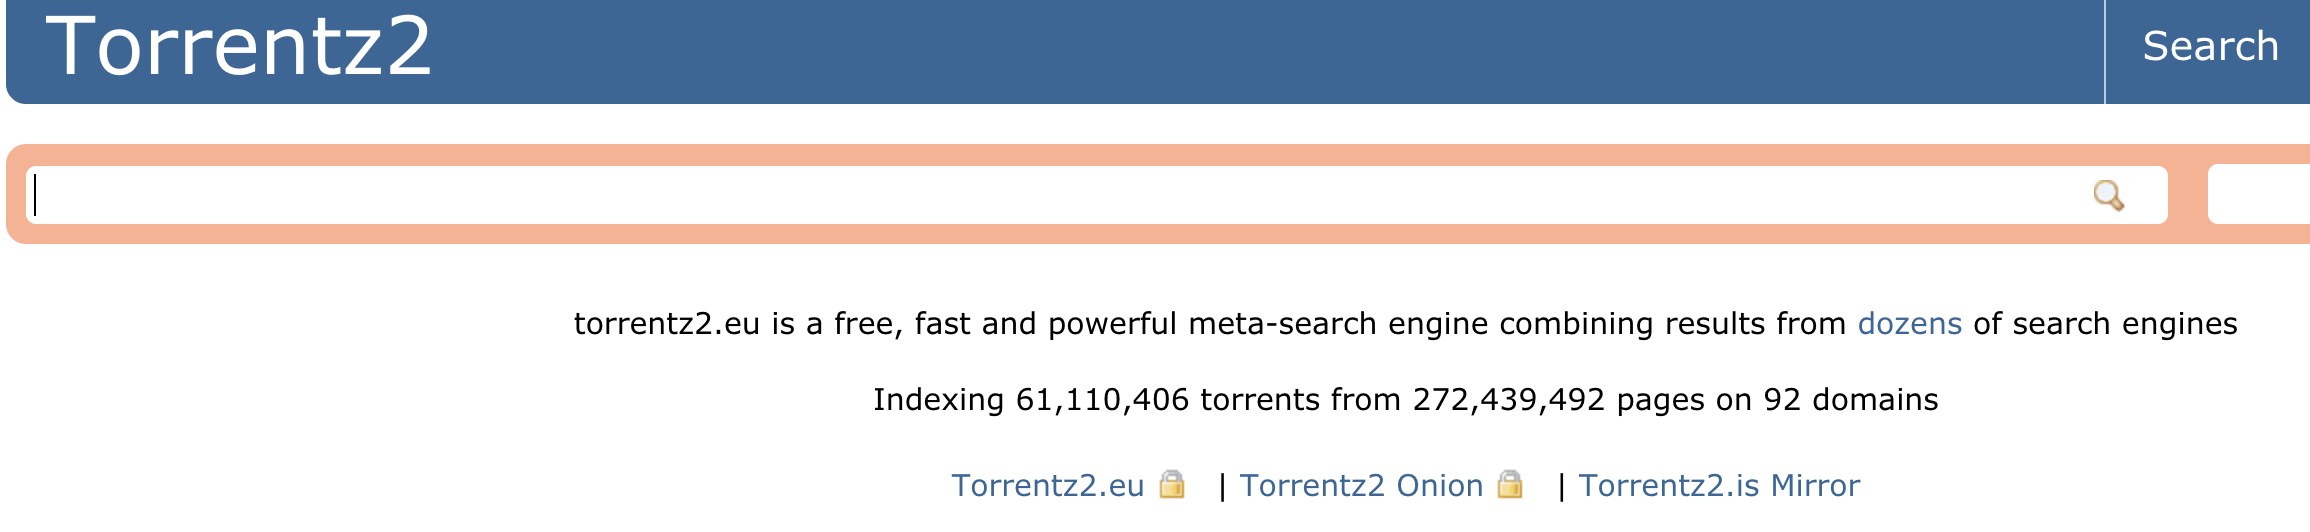 torrent search engine 1 torrentz2